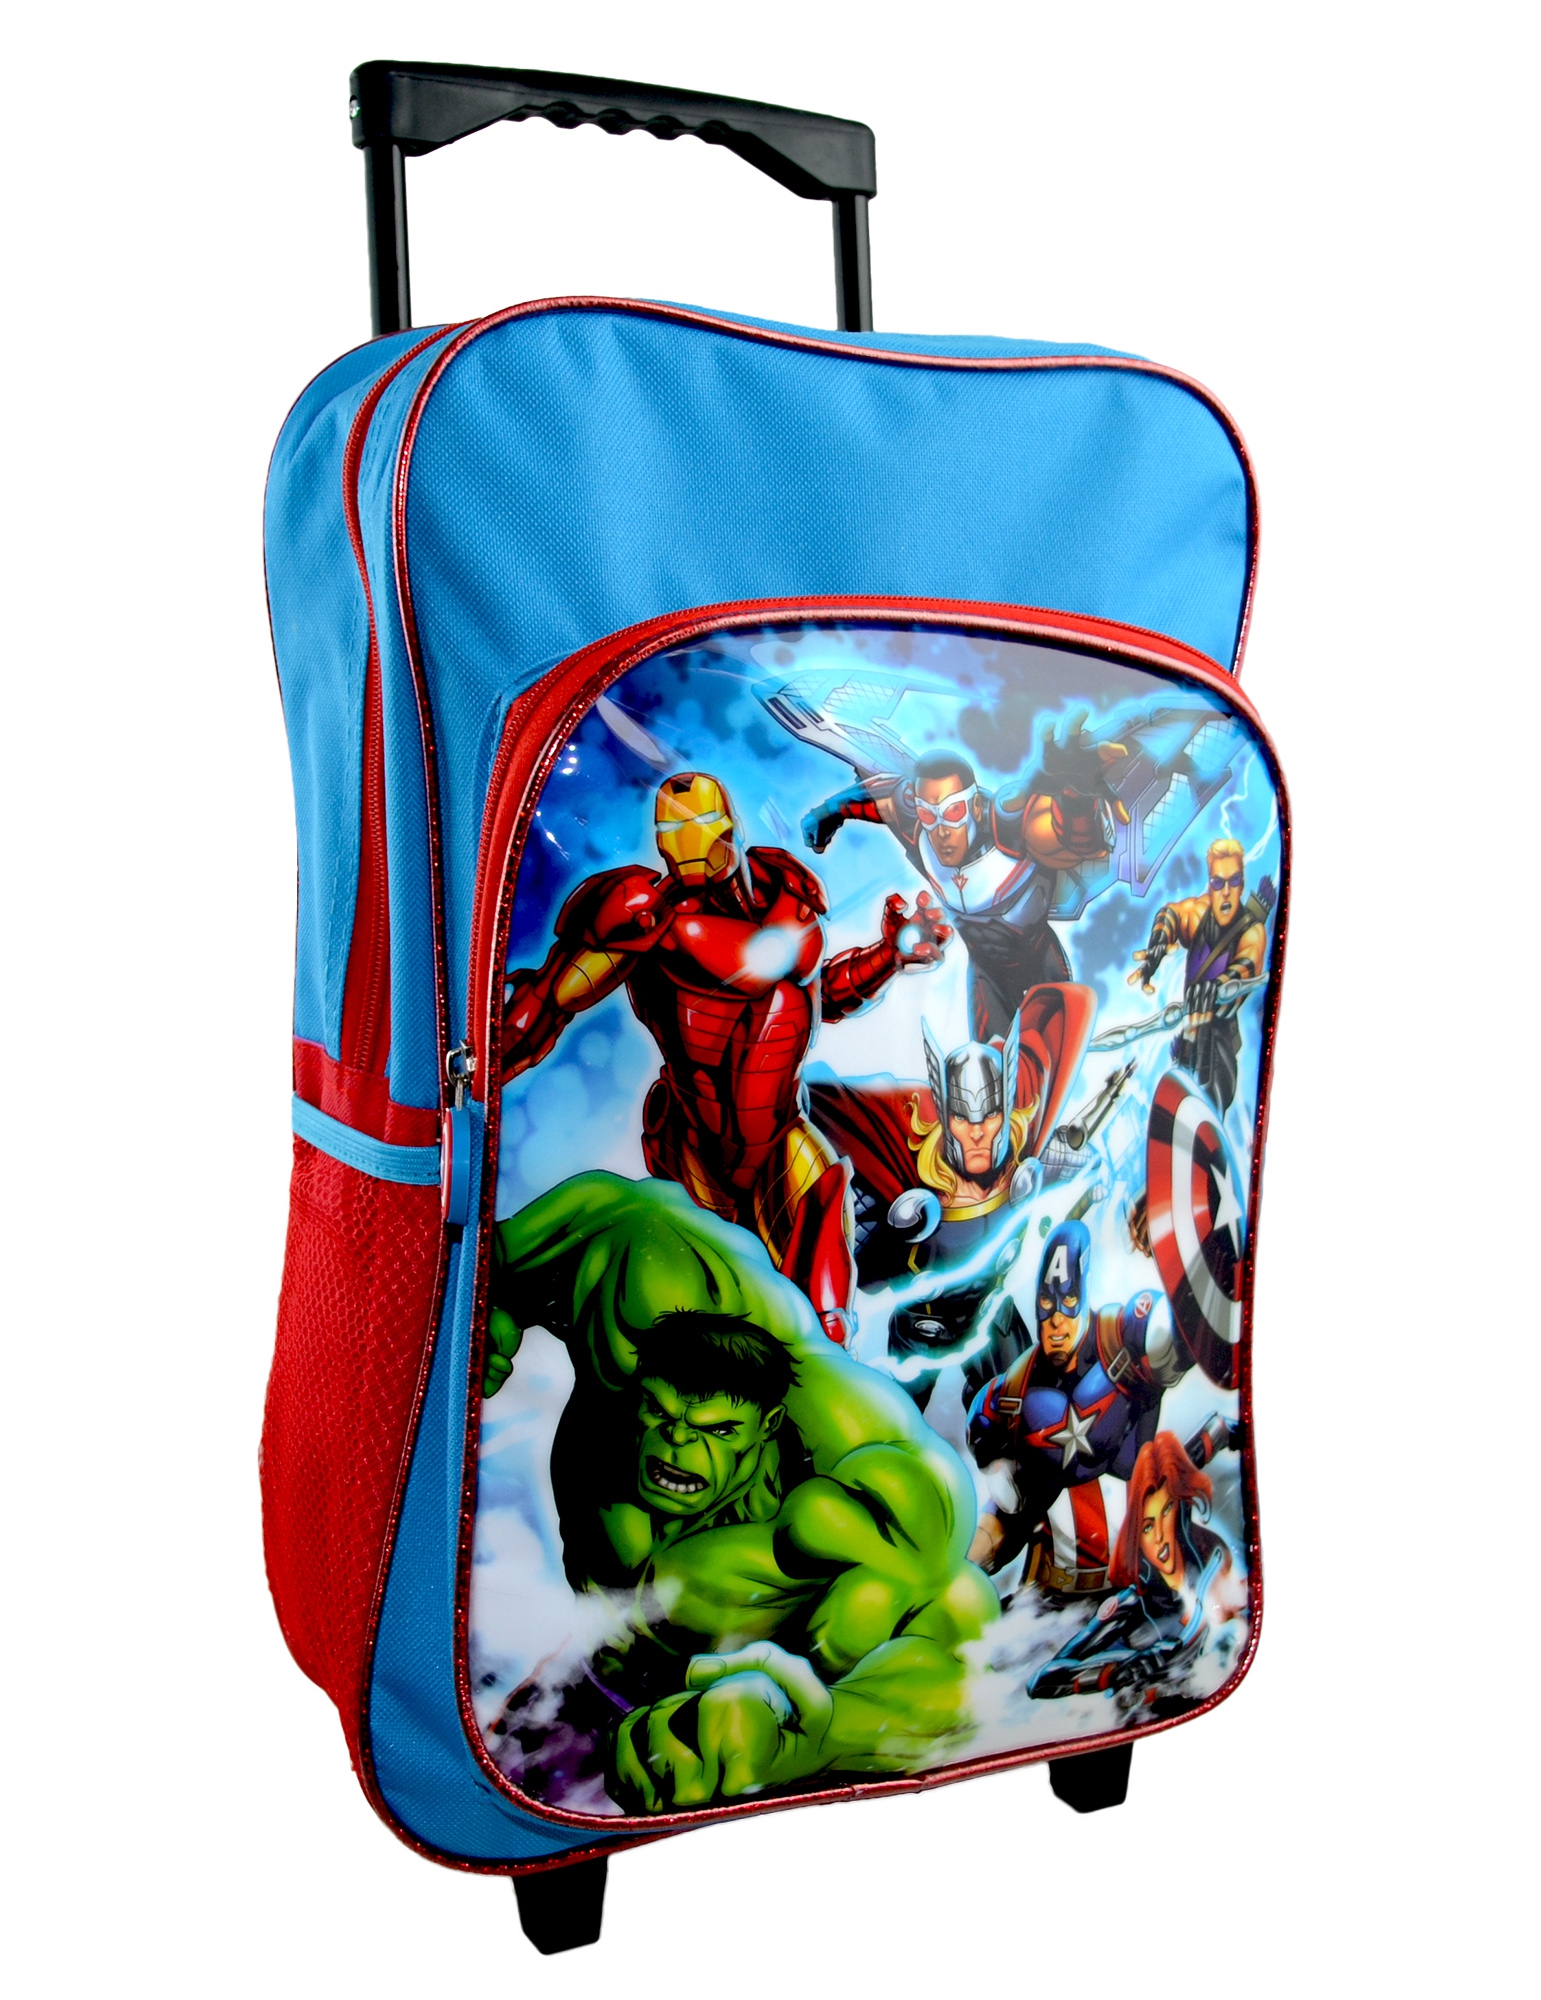 Avengers 'Force' Trolley Backpack School Travel Roller Wheeled Bag